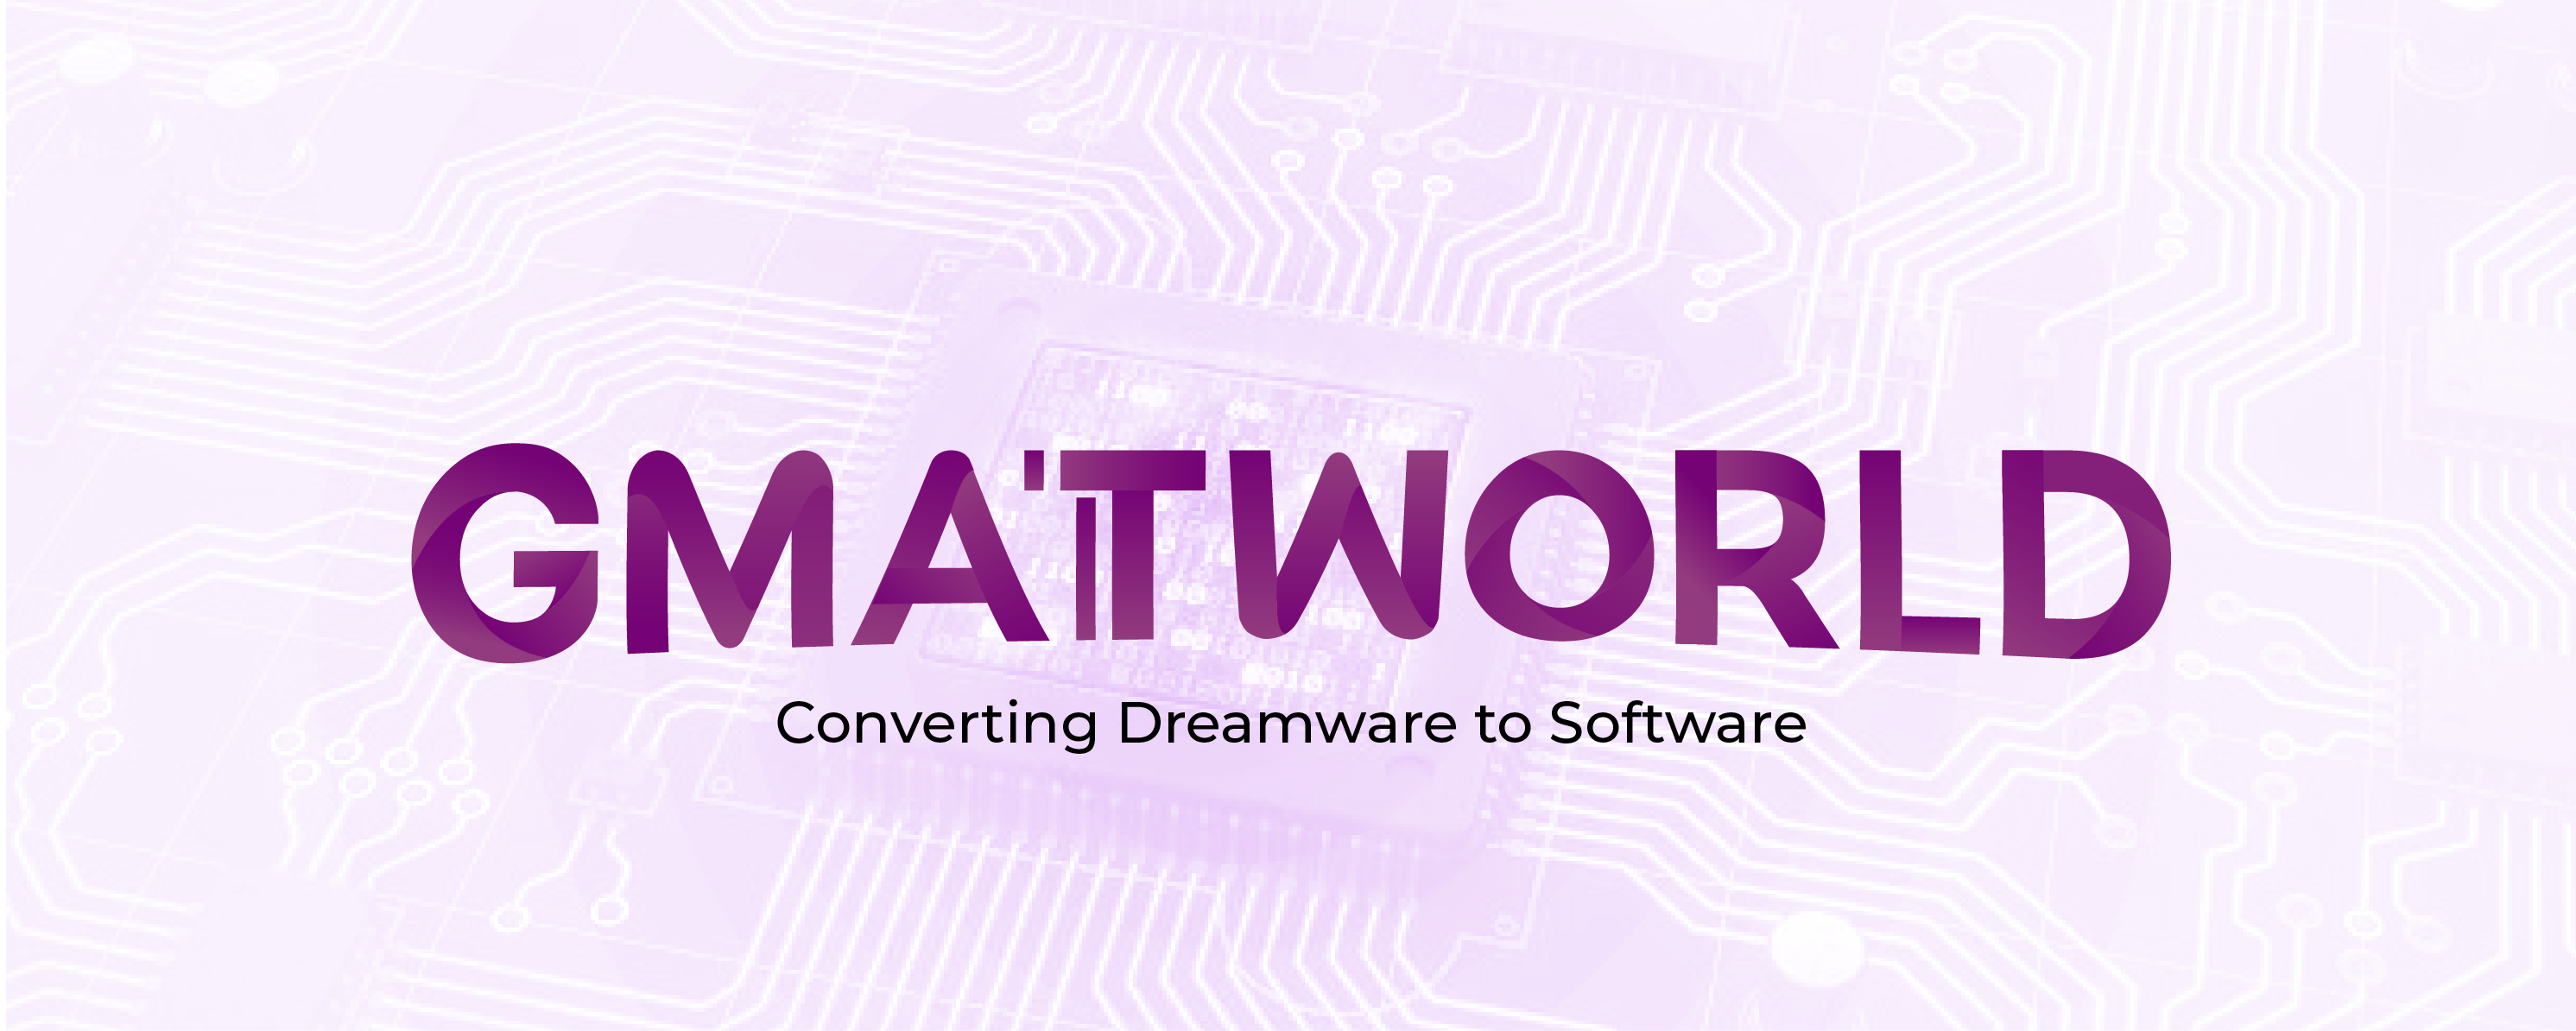 Gmattworld, I convert Dreamware to Software